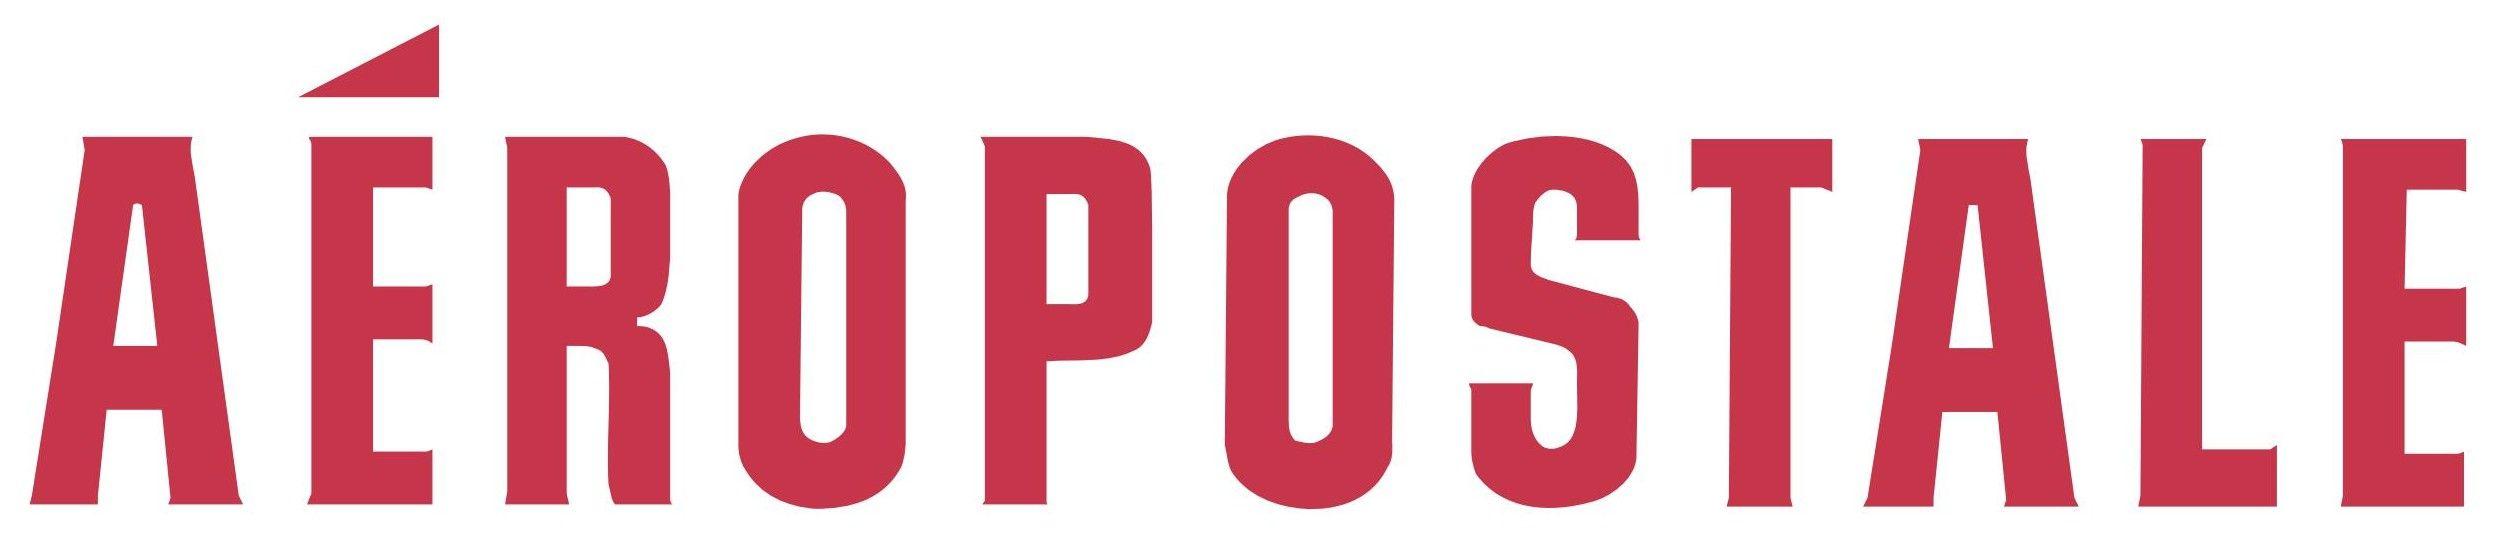 Areopostle Logo - Aéropostale Logo [EPS File] | Clothing Company Logos, 2019